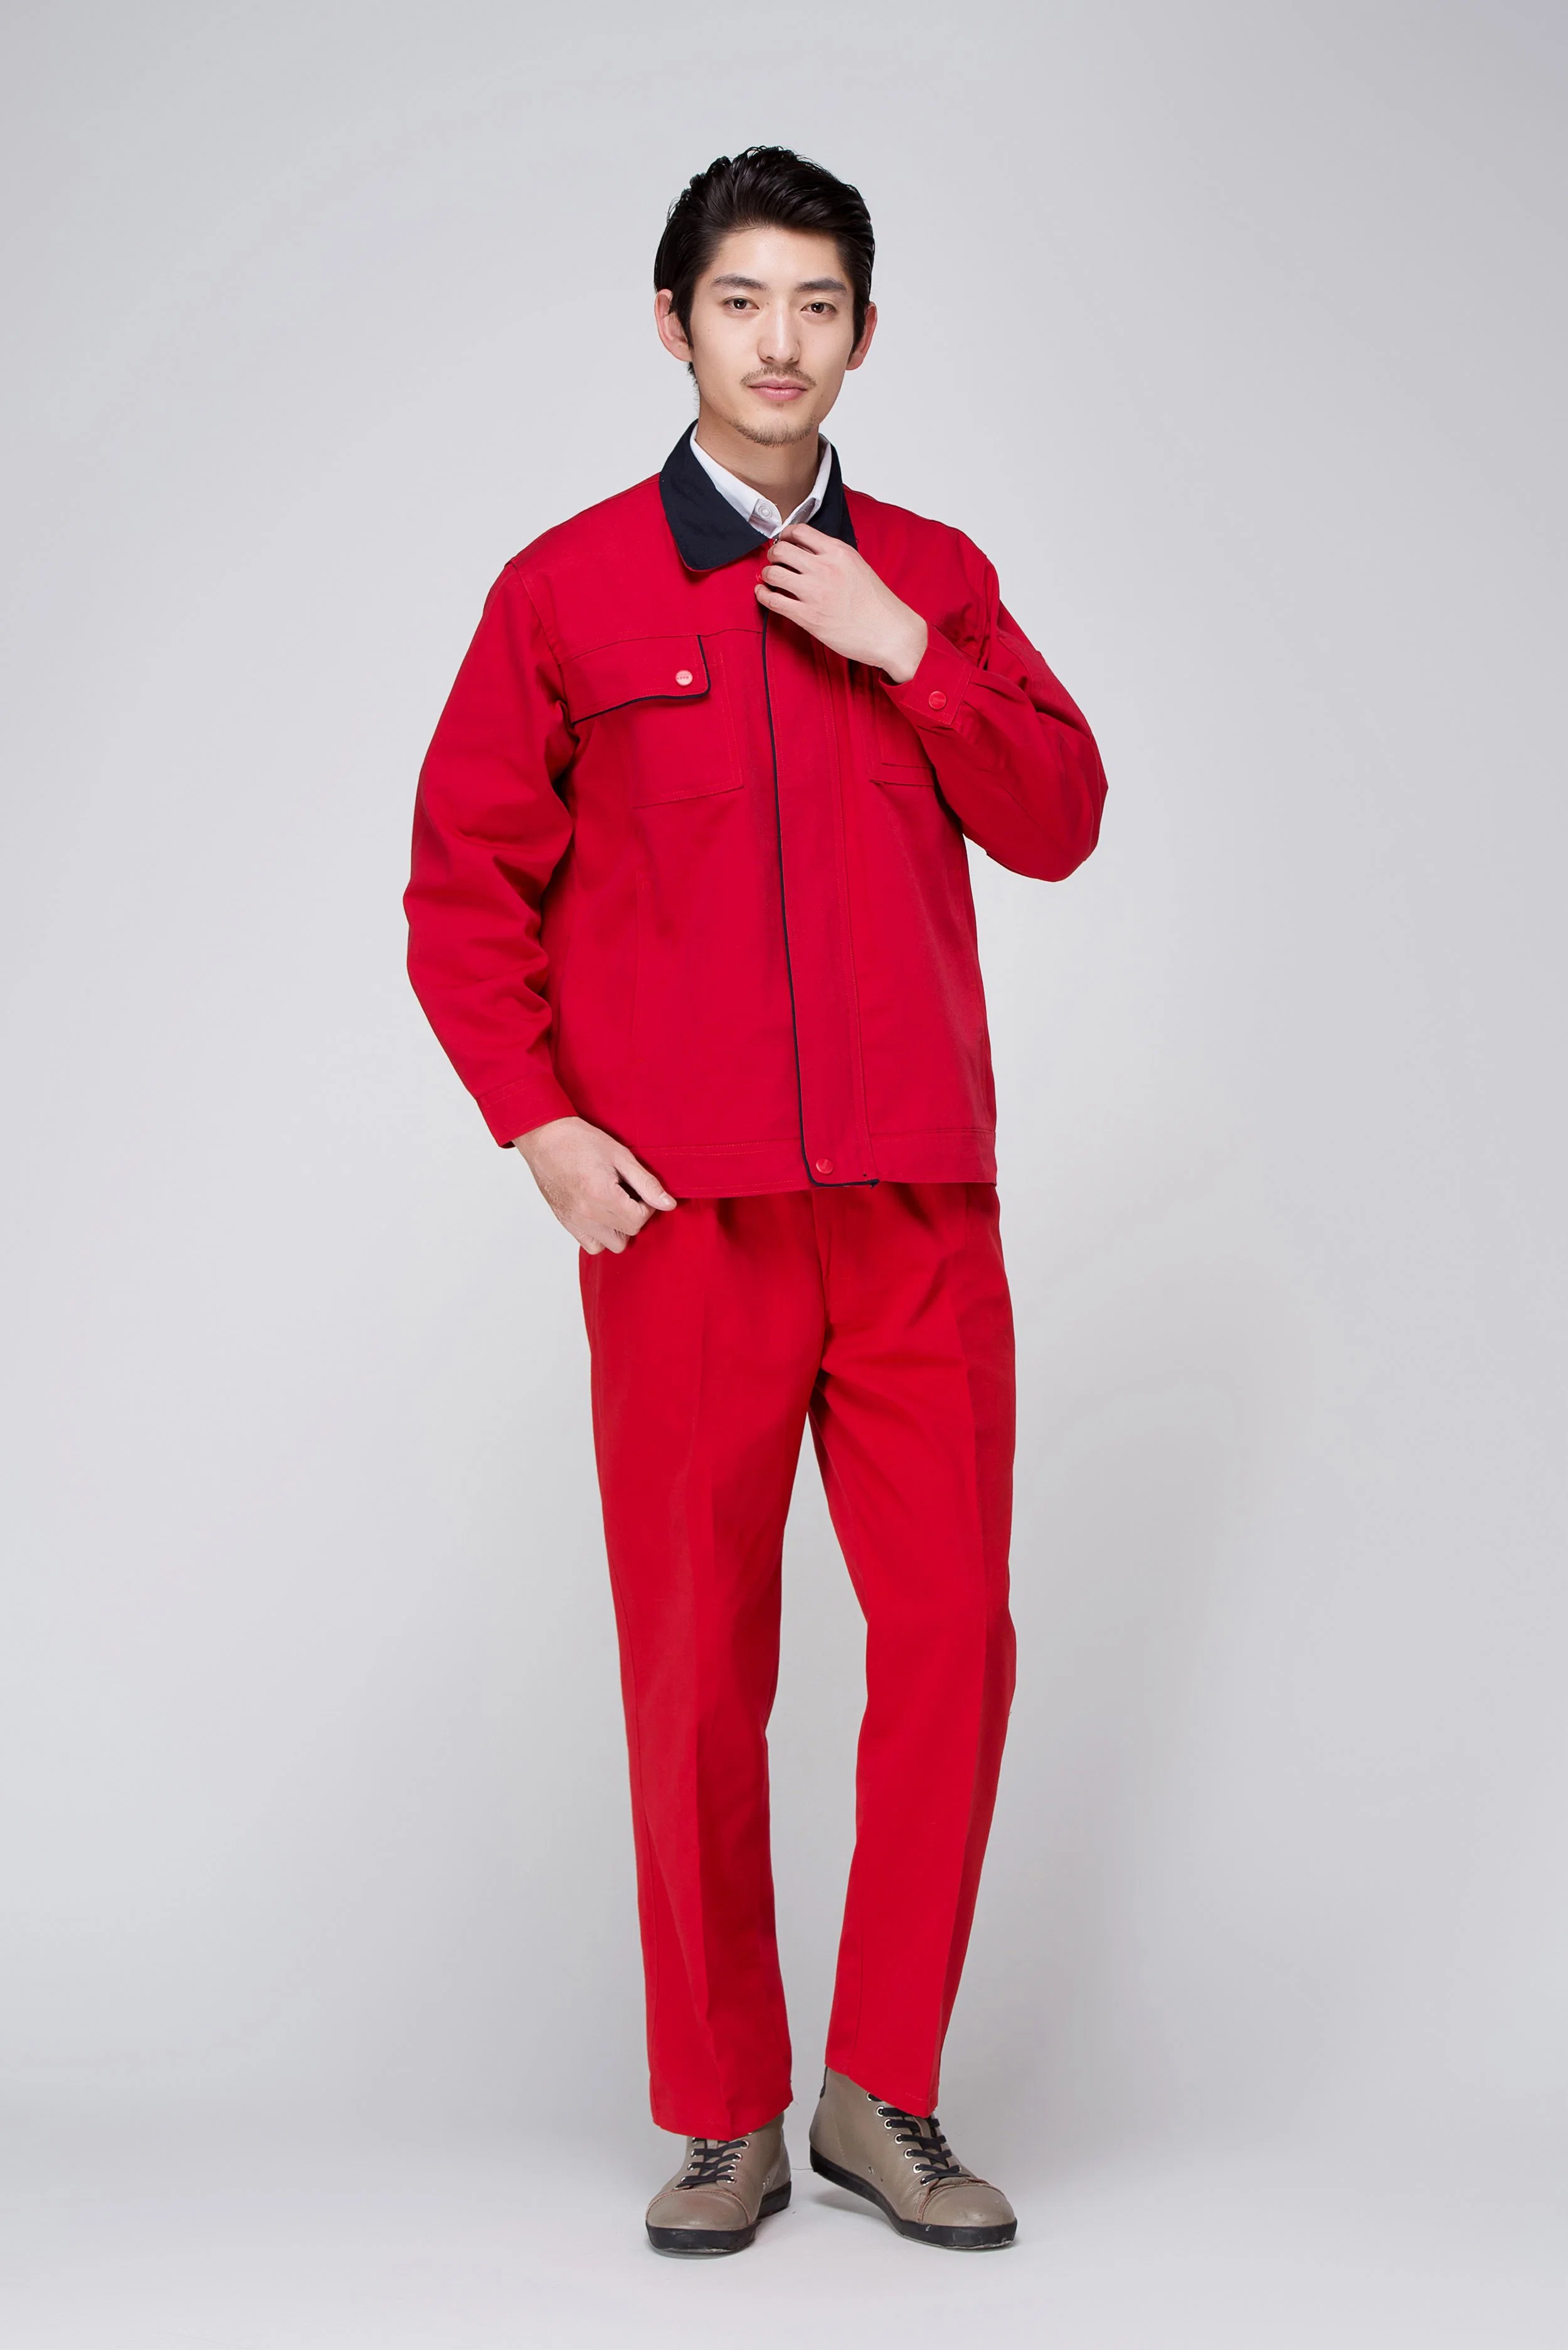 Langarm Arbeitskleidung Arbeitskleidung für Männer Werkstatt Arbeitskleidung